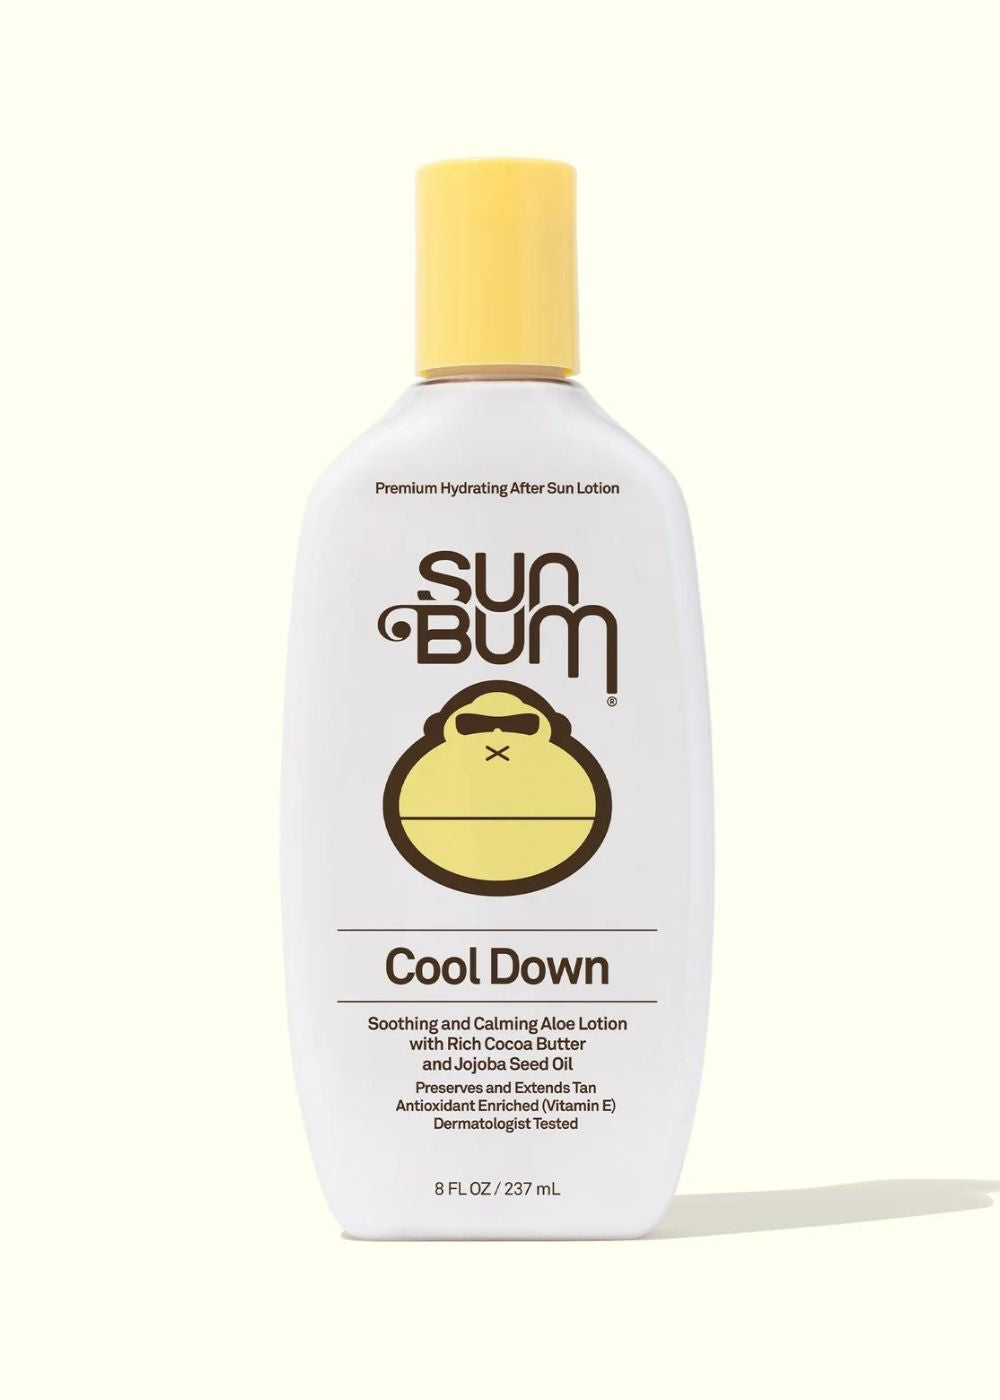 Sun Bum Cool Down After Sun Lotion  237 mL / 8 FL OZ - קרם אפטר סאן - הרגעה